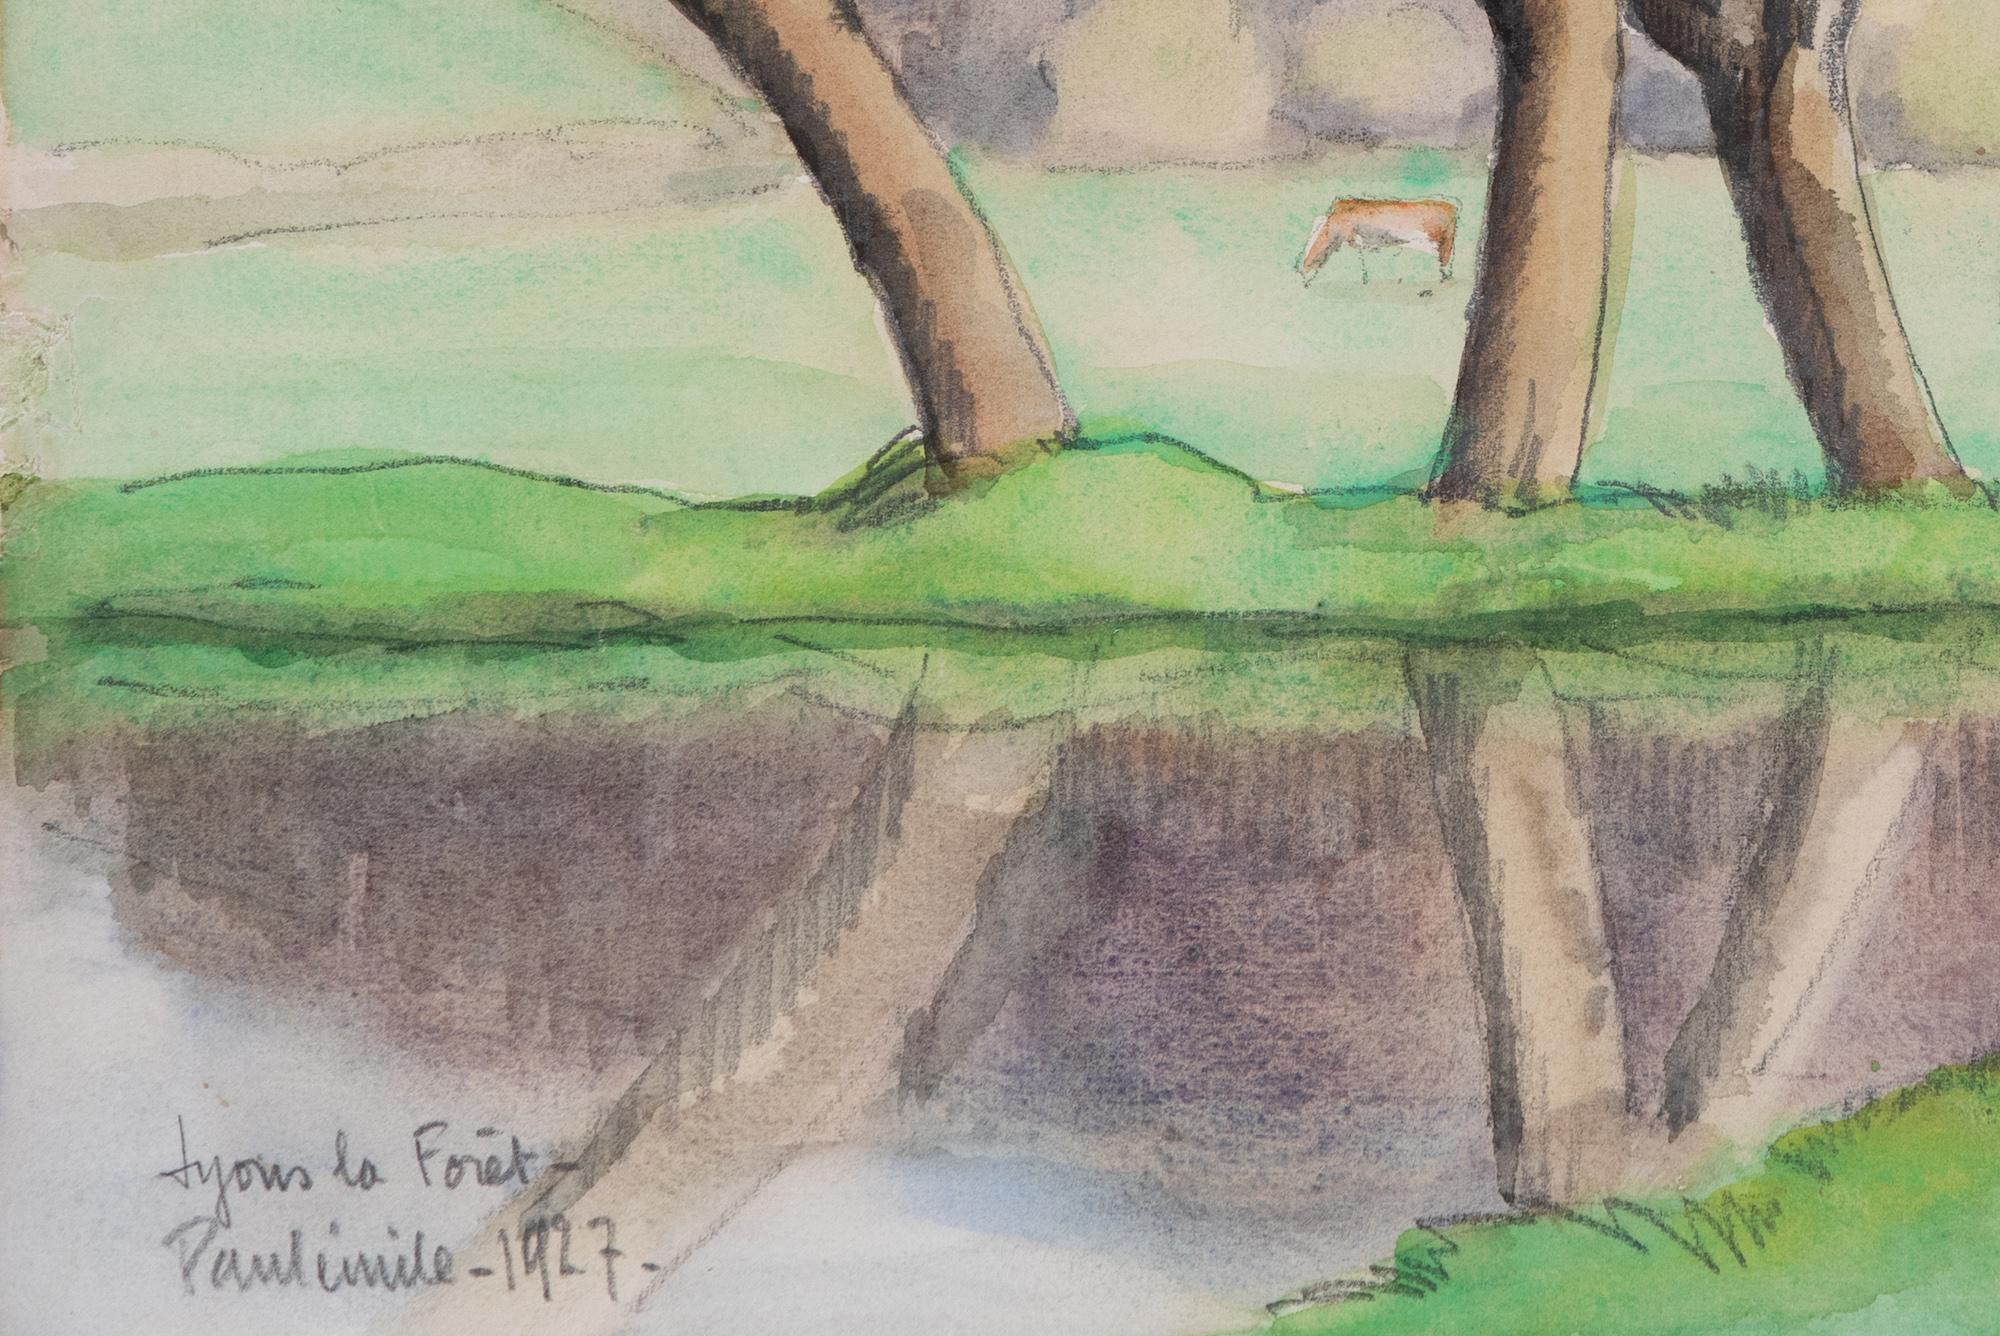 Fluss Eure, Lyons la Forêt von Paulémile Pissarro (1884-1972)
Aquarell und Buntstift auf Papier
31,5 x 48,5 cm (12 ³/₈ x 19 ¹/₈ Zoll)
Betitelt, signiert und datiert unten links, Lyons la Forêt - Paulémile - 1927 -

Dieses Aquarell zeigt den Fluss